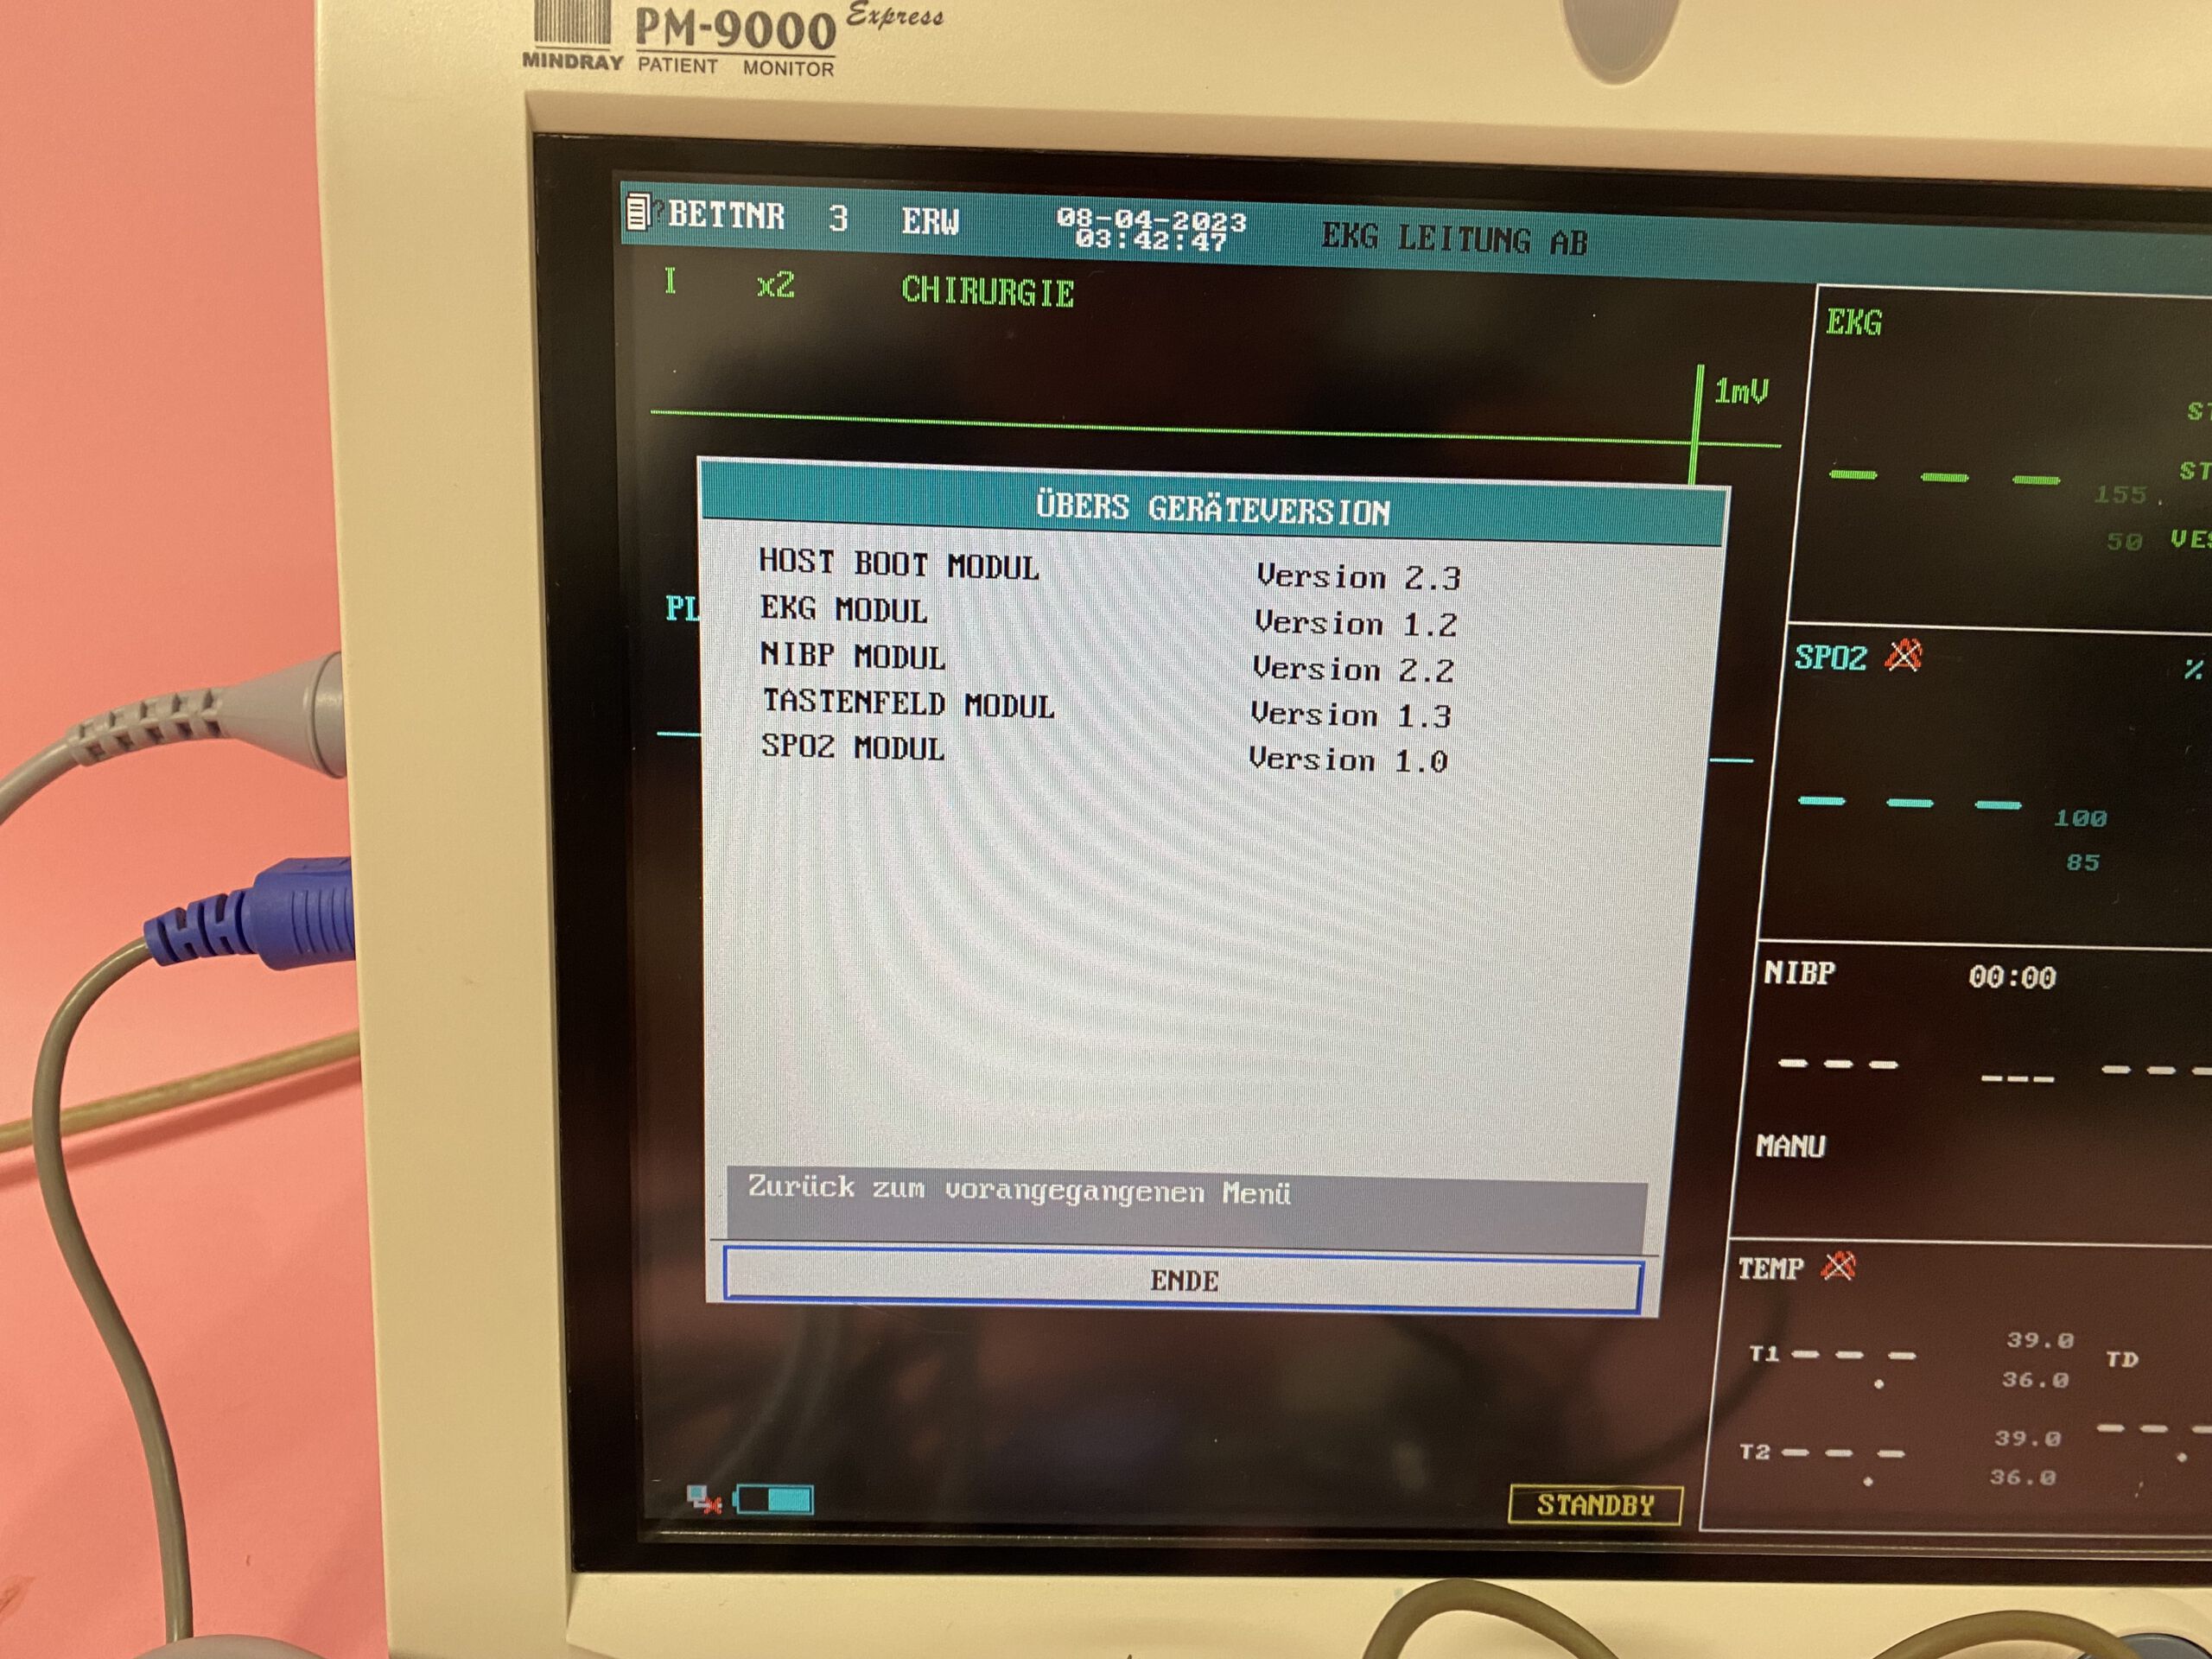 Mindray PM-9000 Express Monitor